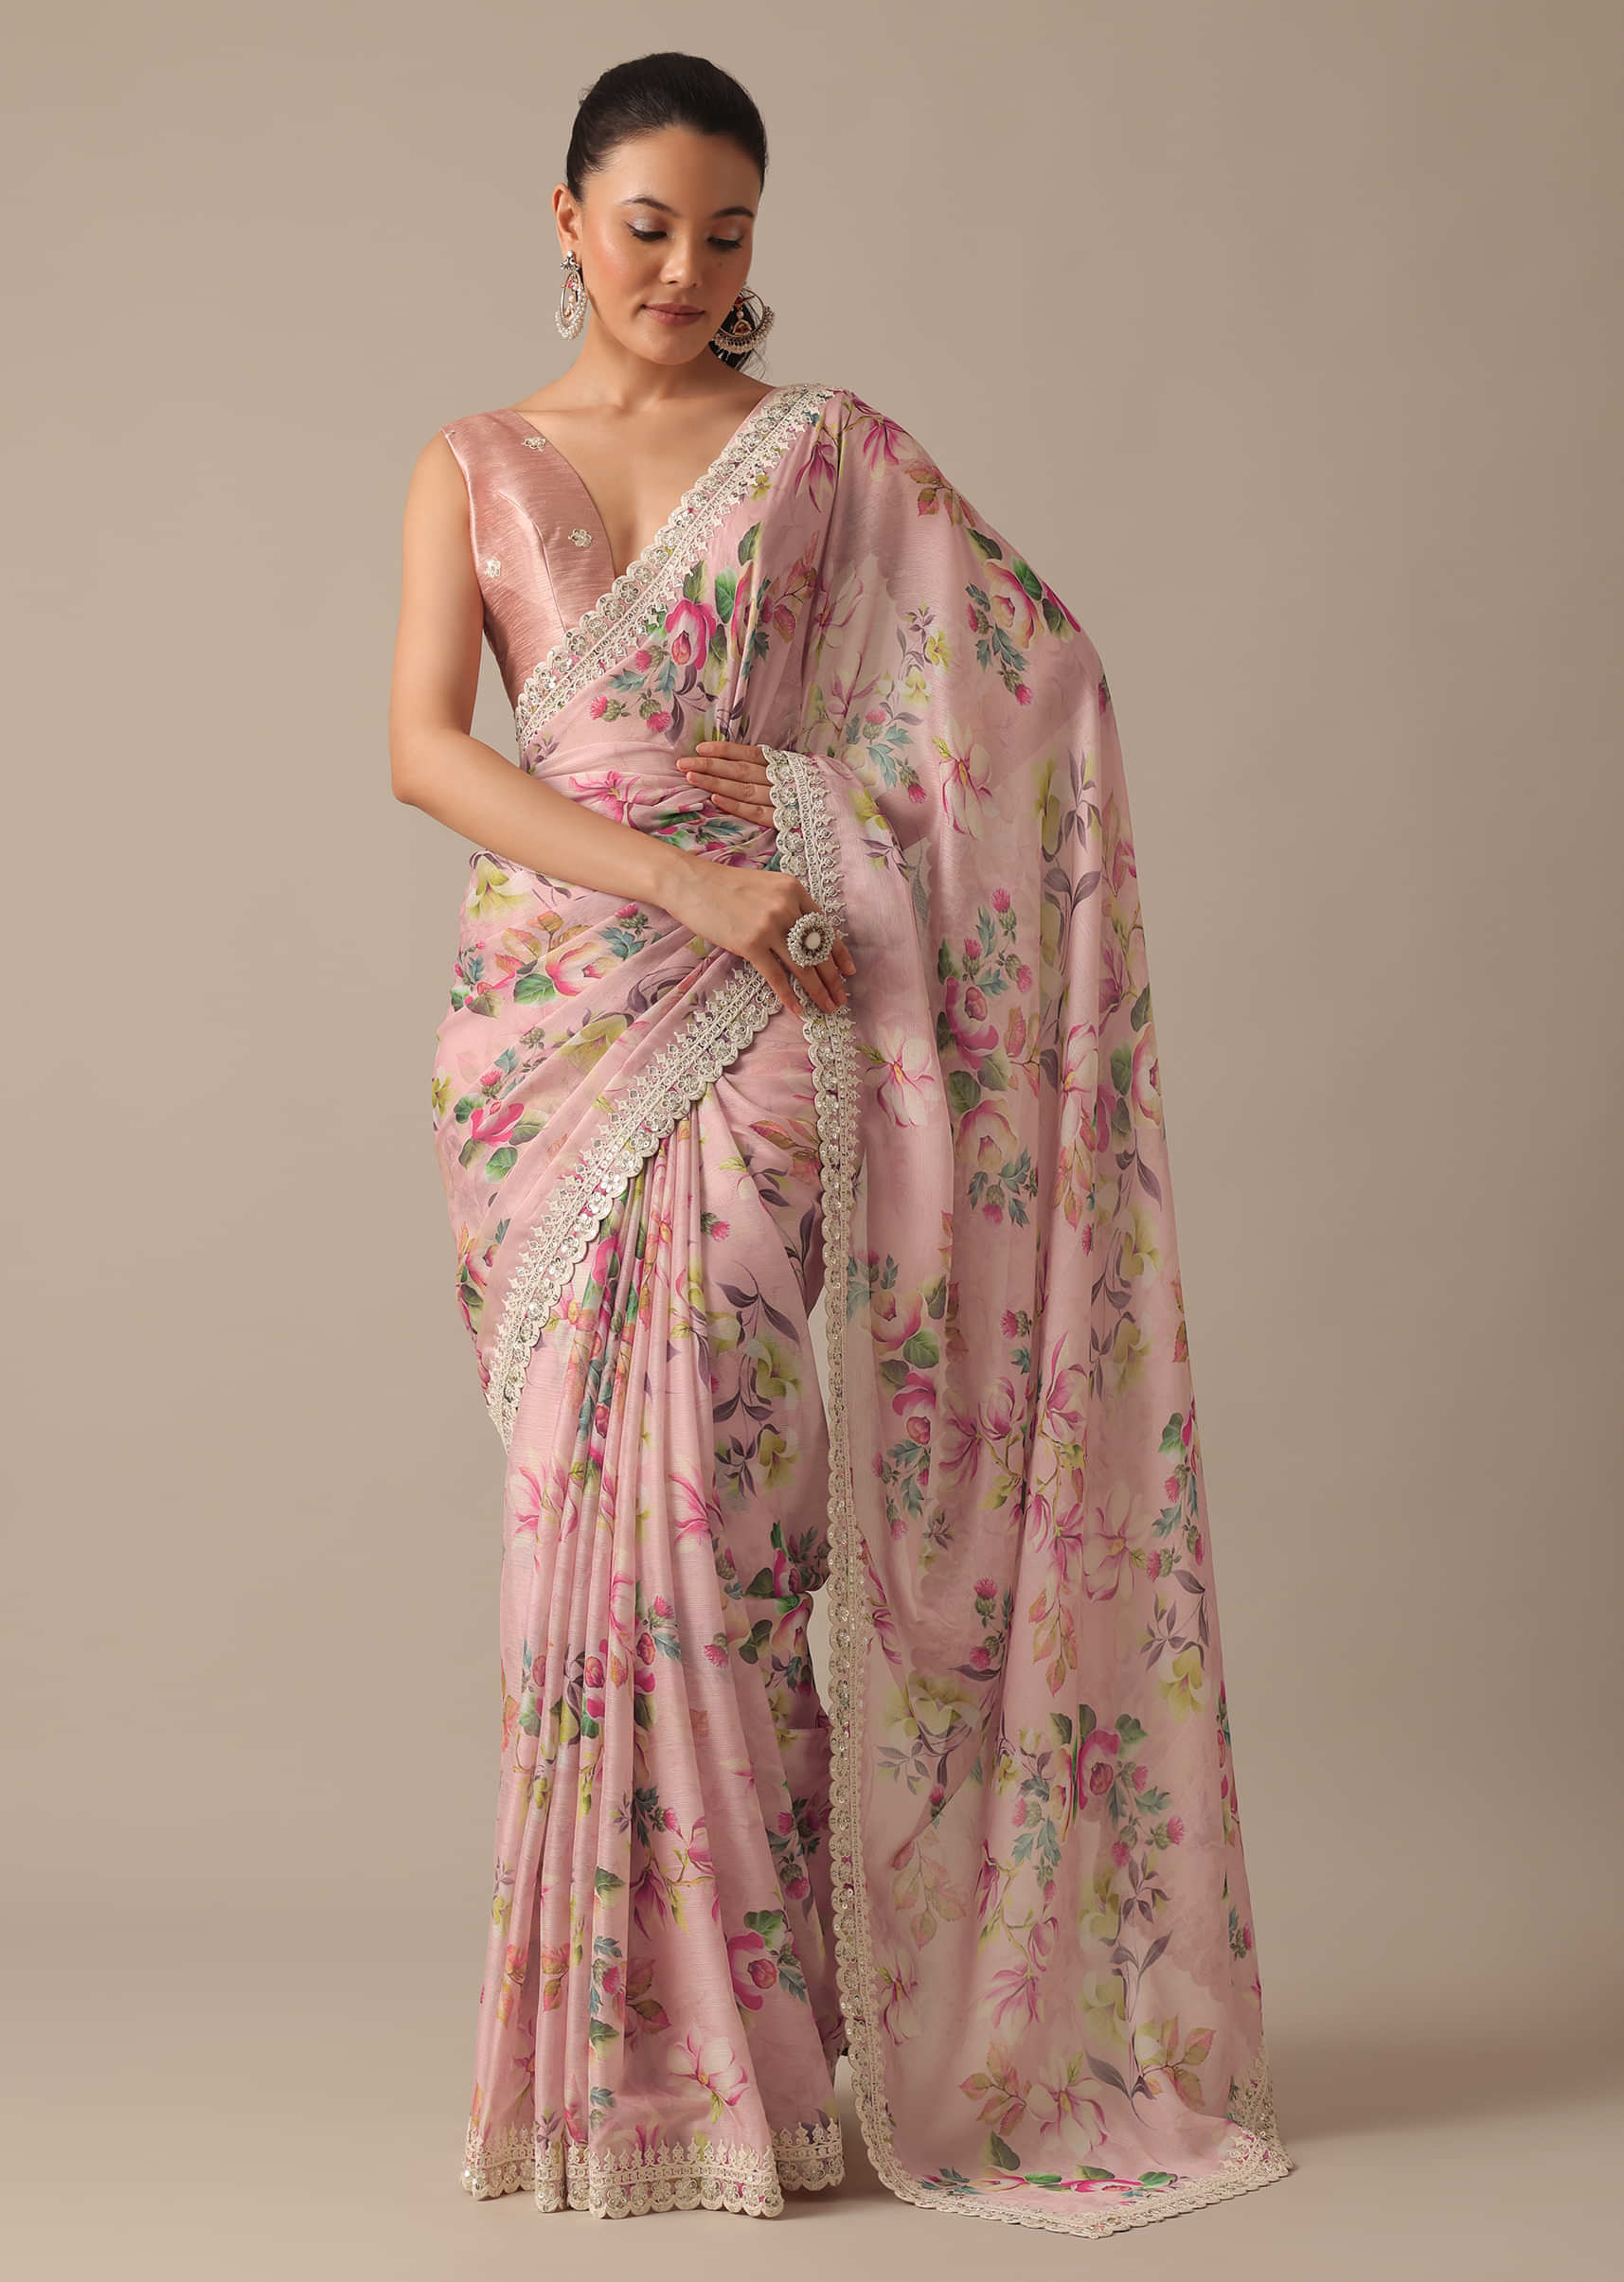 Shop High Waist Belt Saree for Women Online from India's Luxury Designers  2024